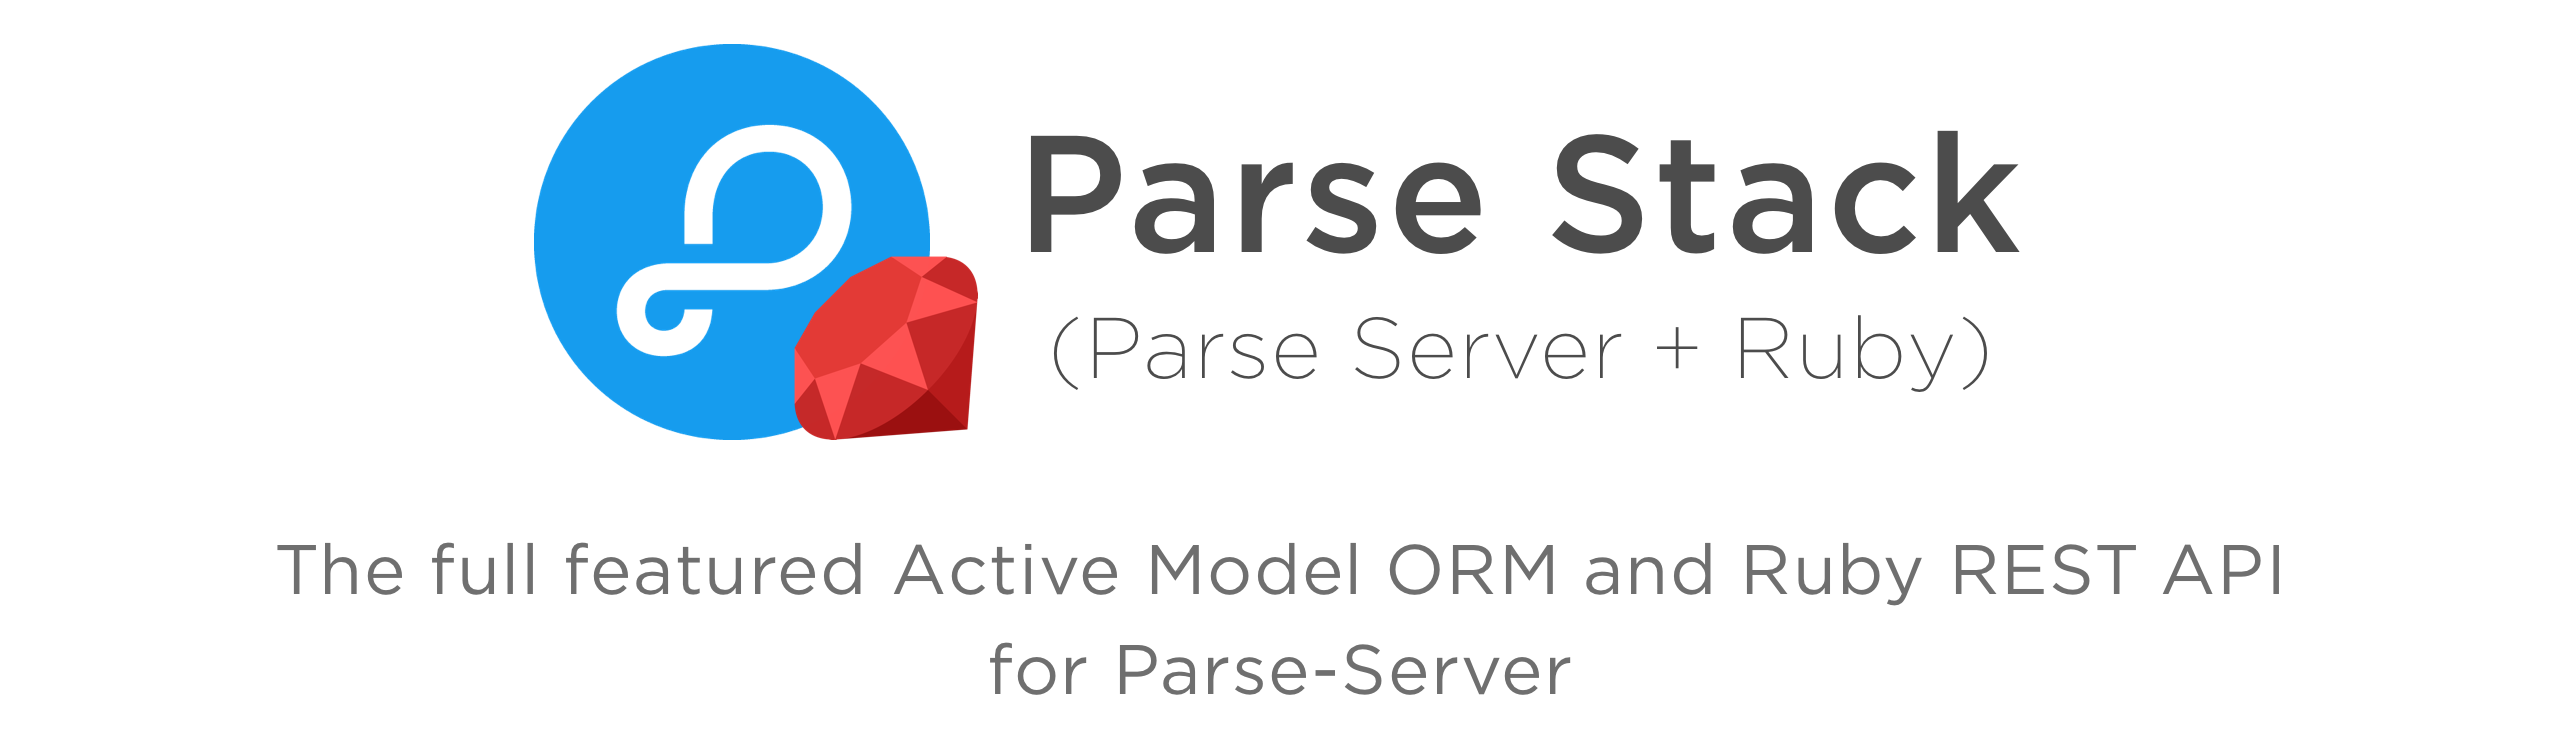 Parse-server